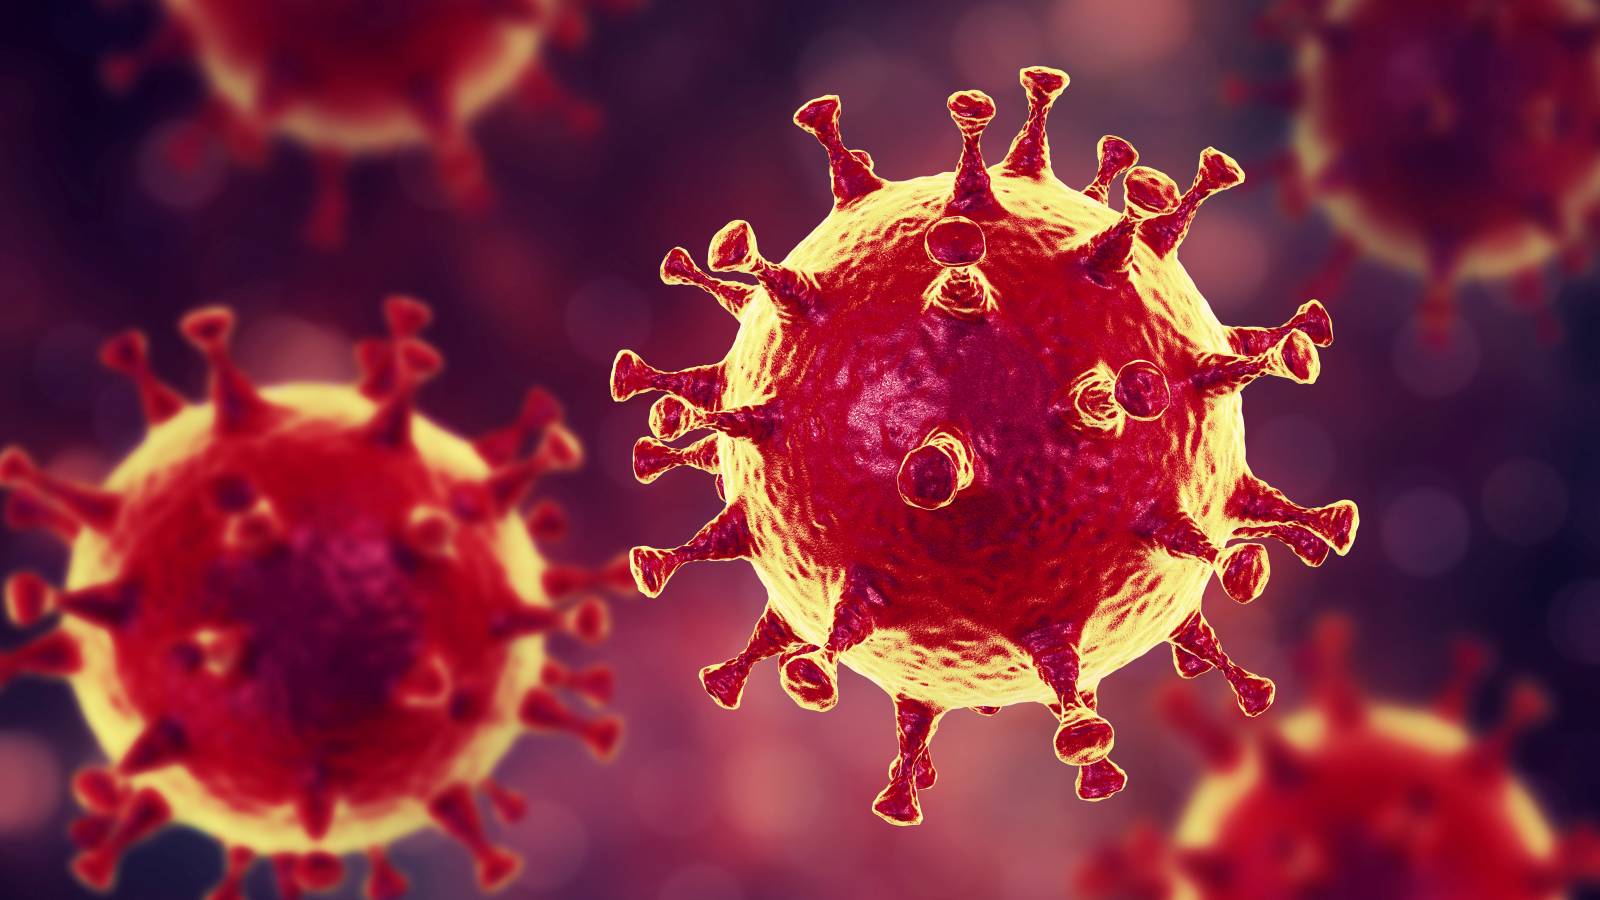 600.000 XNUMX doses de vaccin contre le coronavirus en janvier